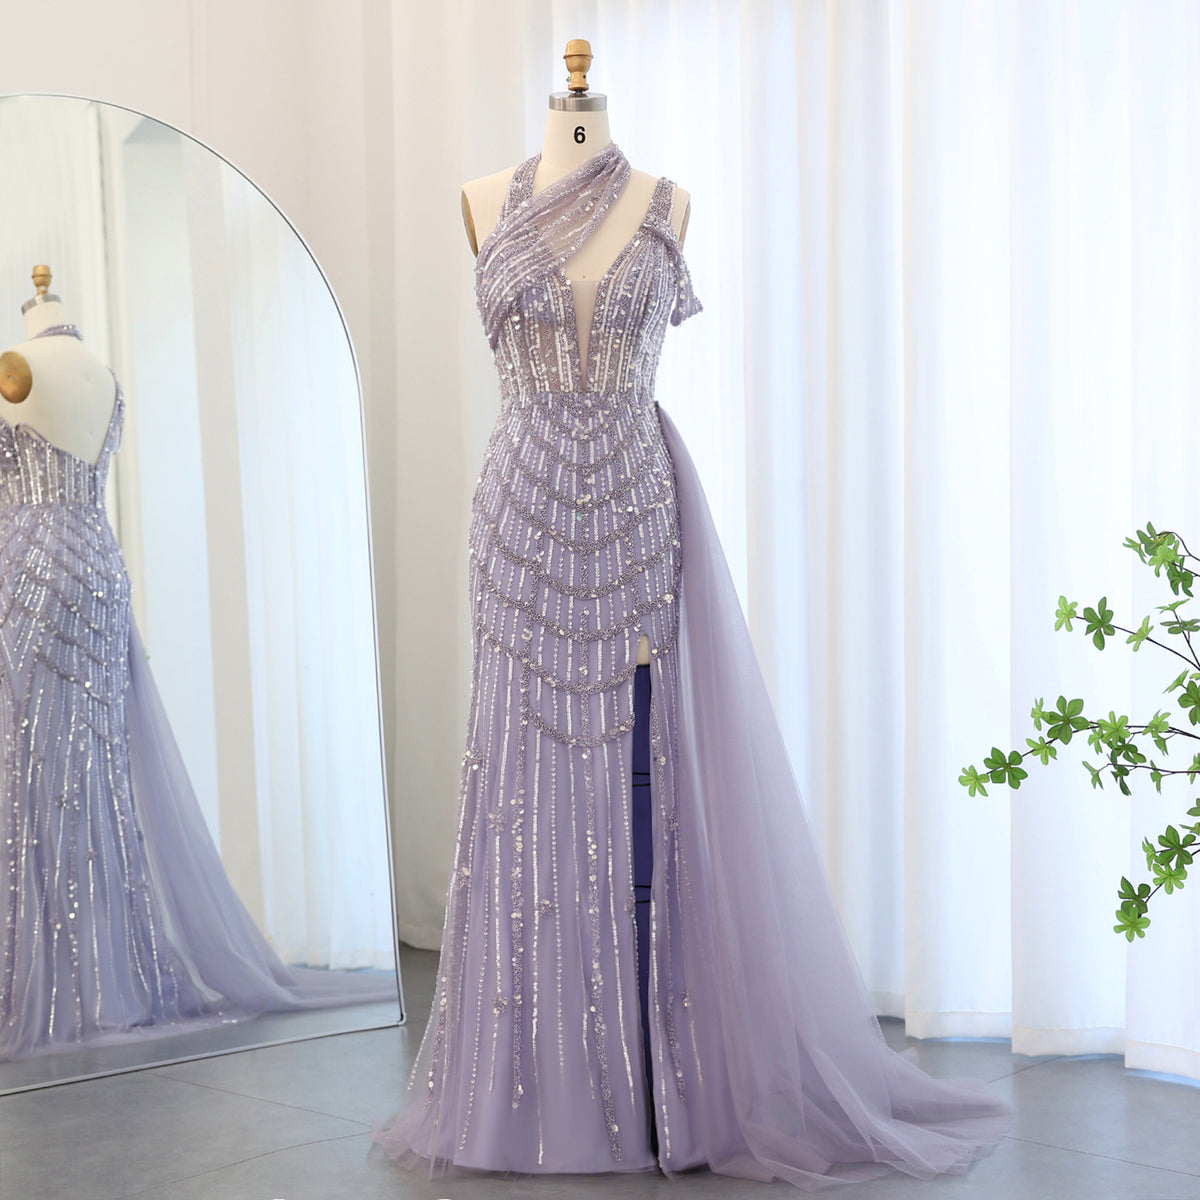 Sharon Said Luxury Beaded Lilac Mermaid Halter Evening Dress with Overskirt Side Slit Turquoise Dubai Wedding Party Dress SS180